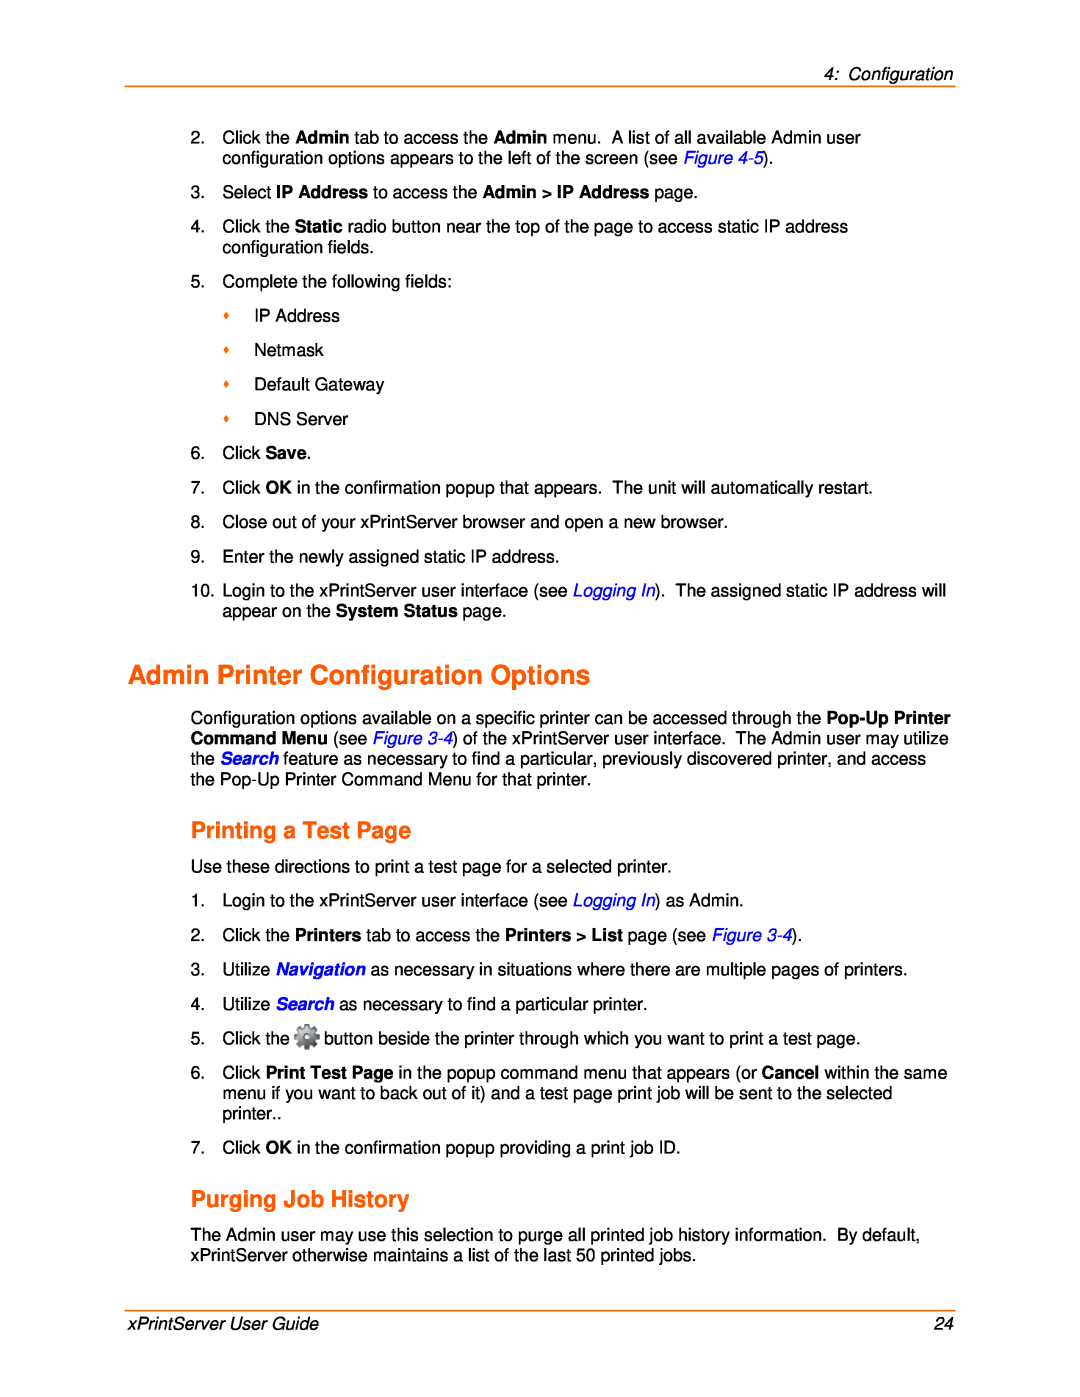 Lantronix 900-603 Admin Printer Configuration Options, Printing a Test Page, Purging Job History, xPrintServer User Guide 